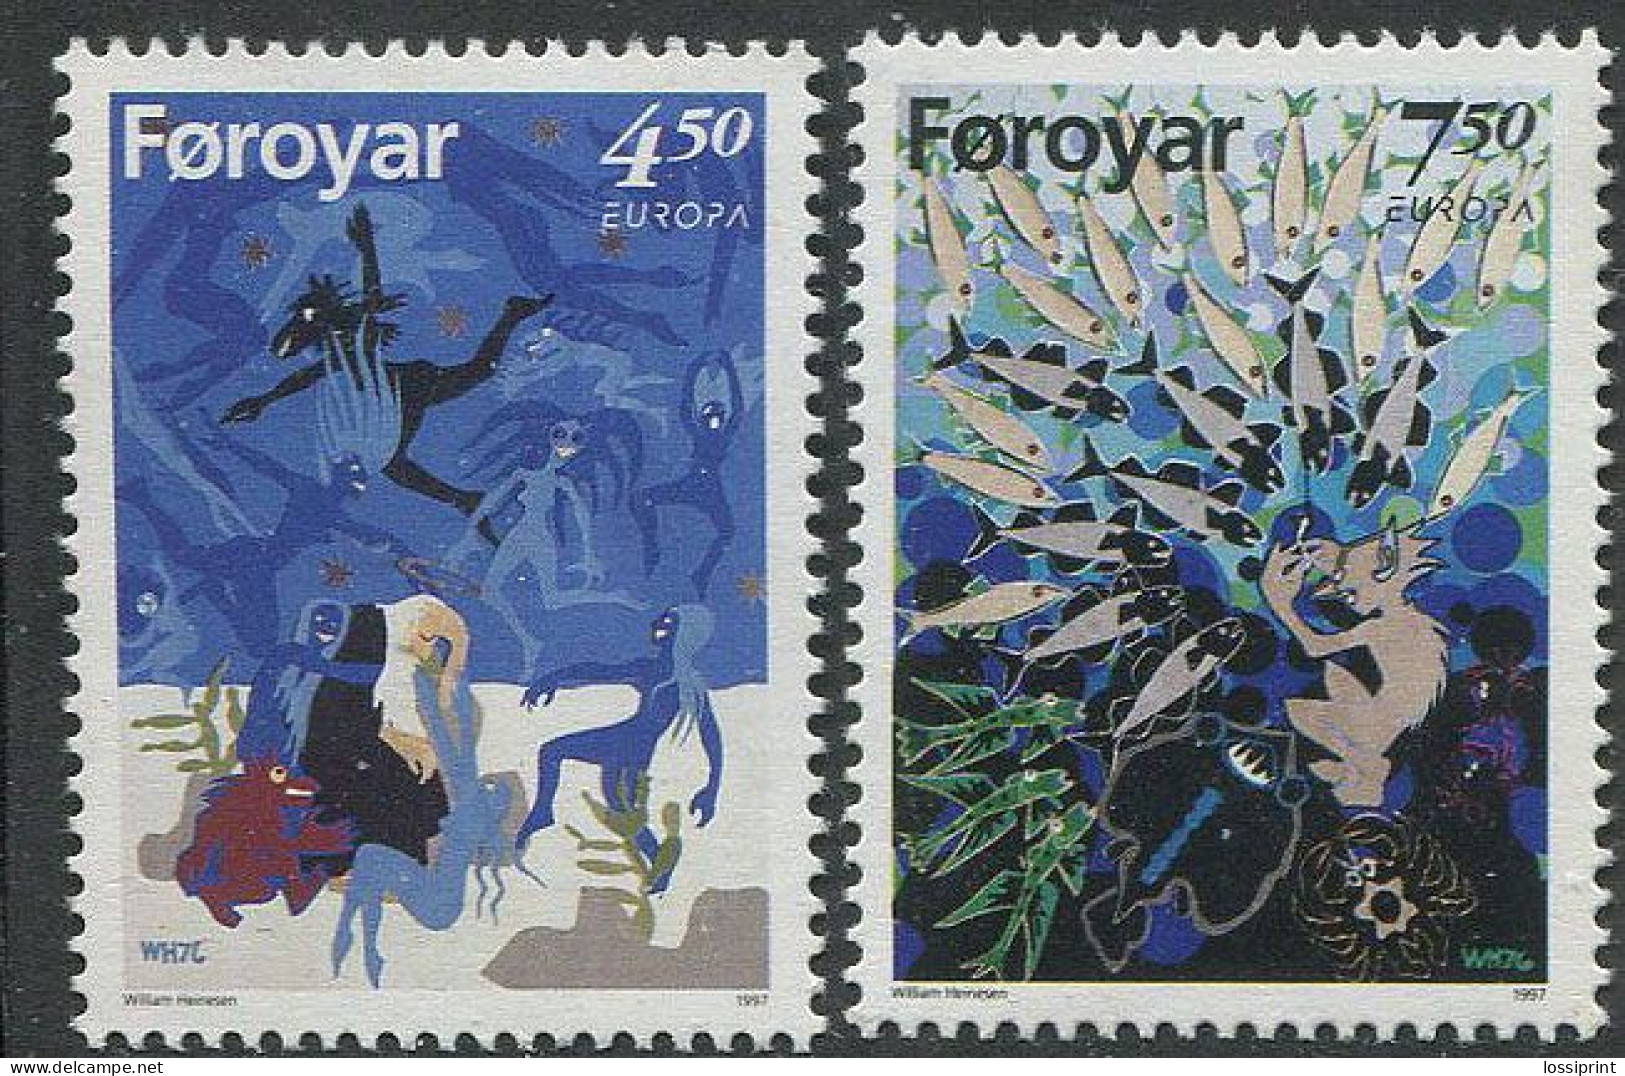 Foroyar:Faroe Islands:Unused Stamps EUROPA Cept 1997, MNH - 1997